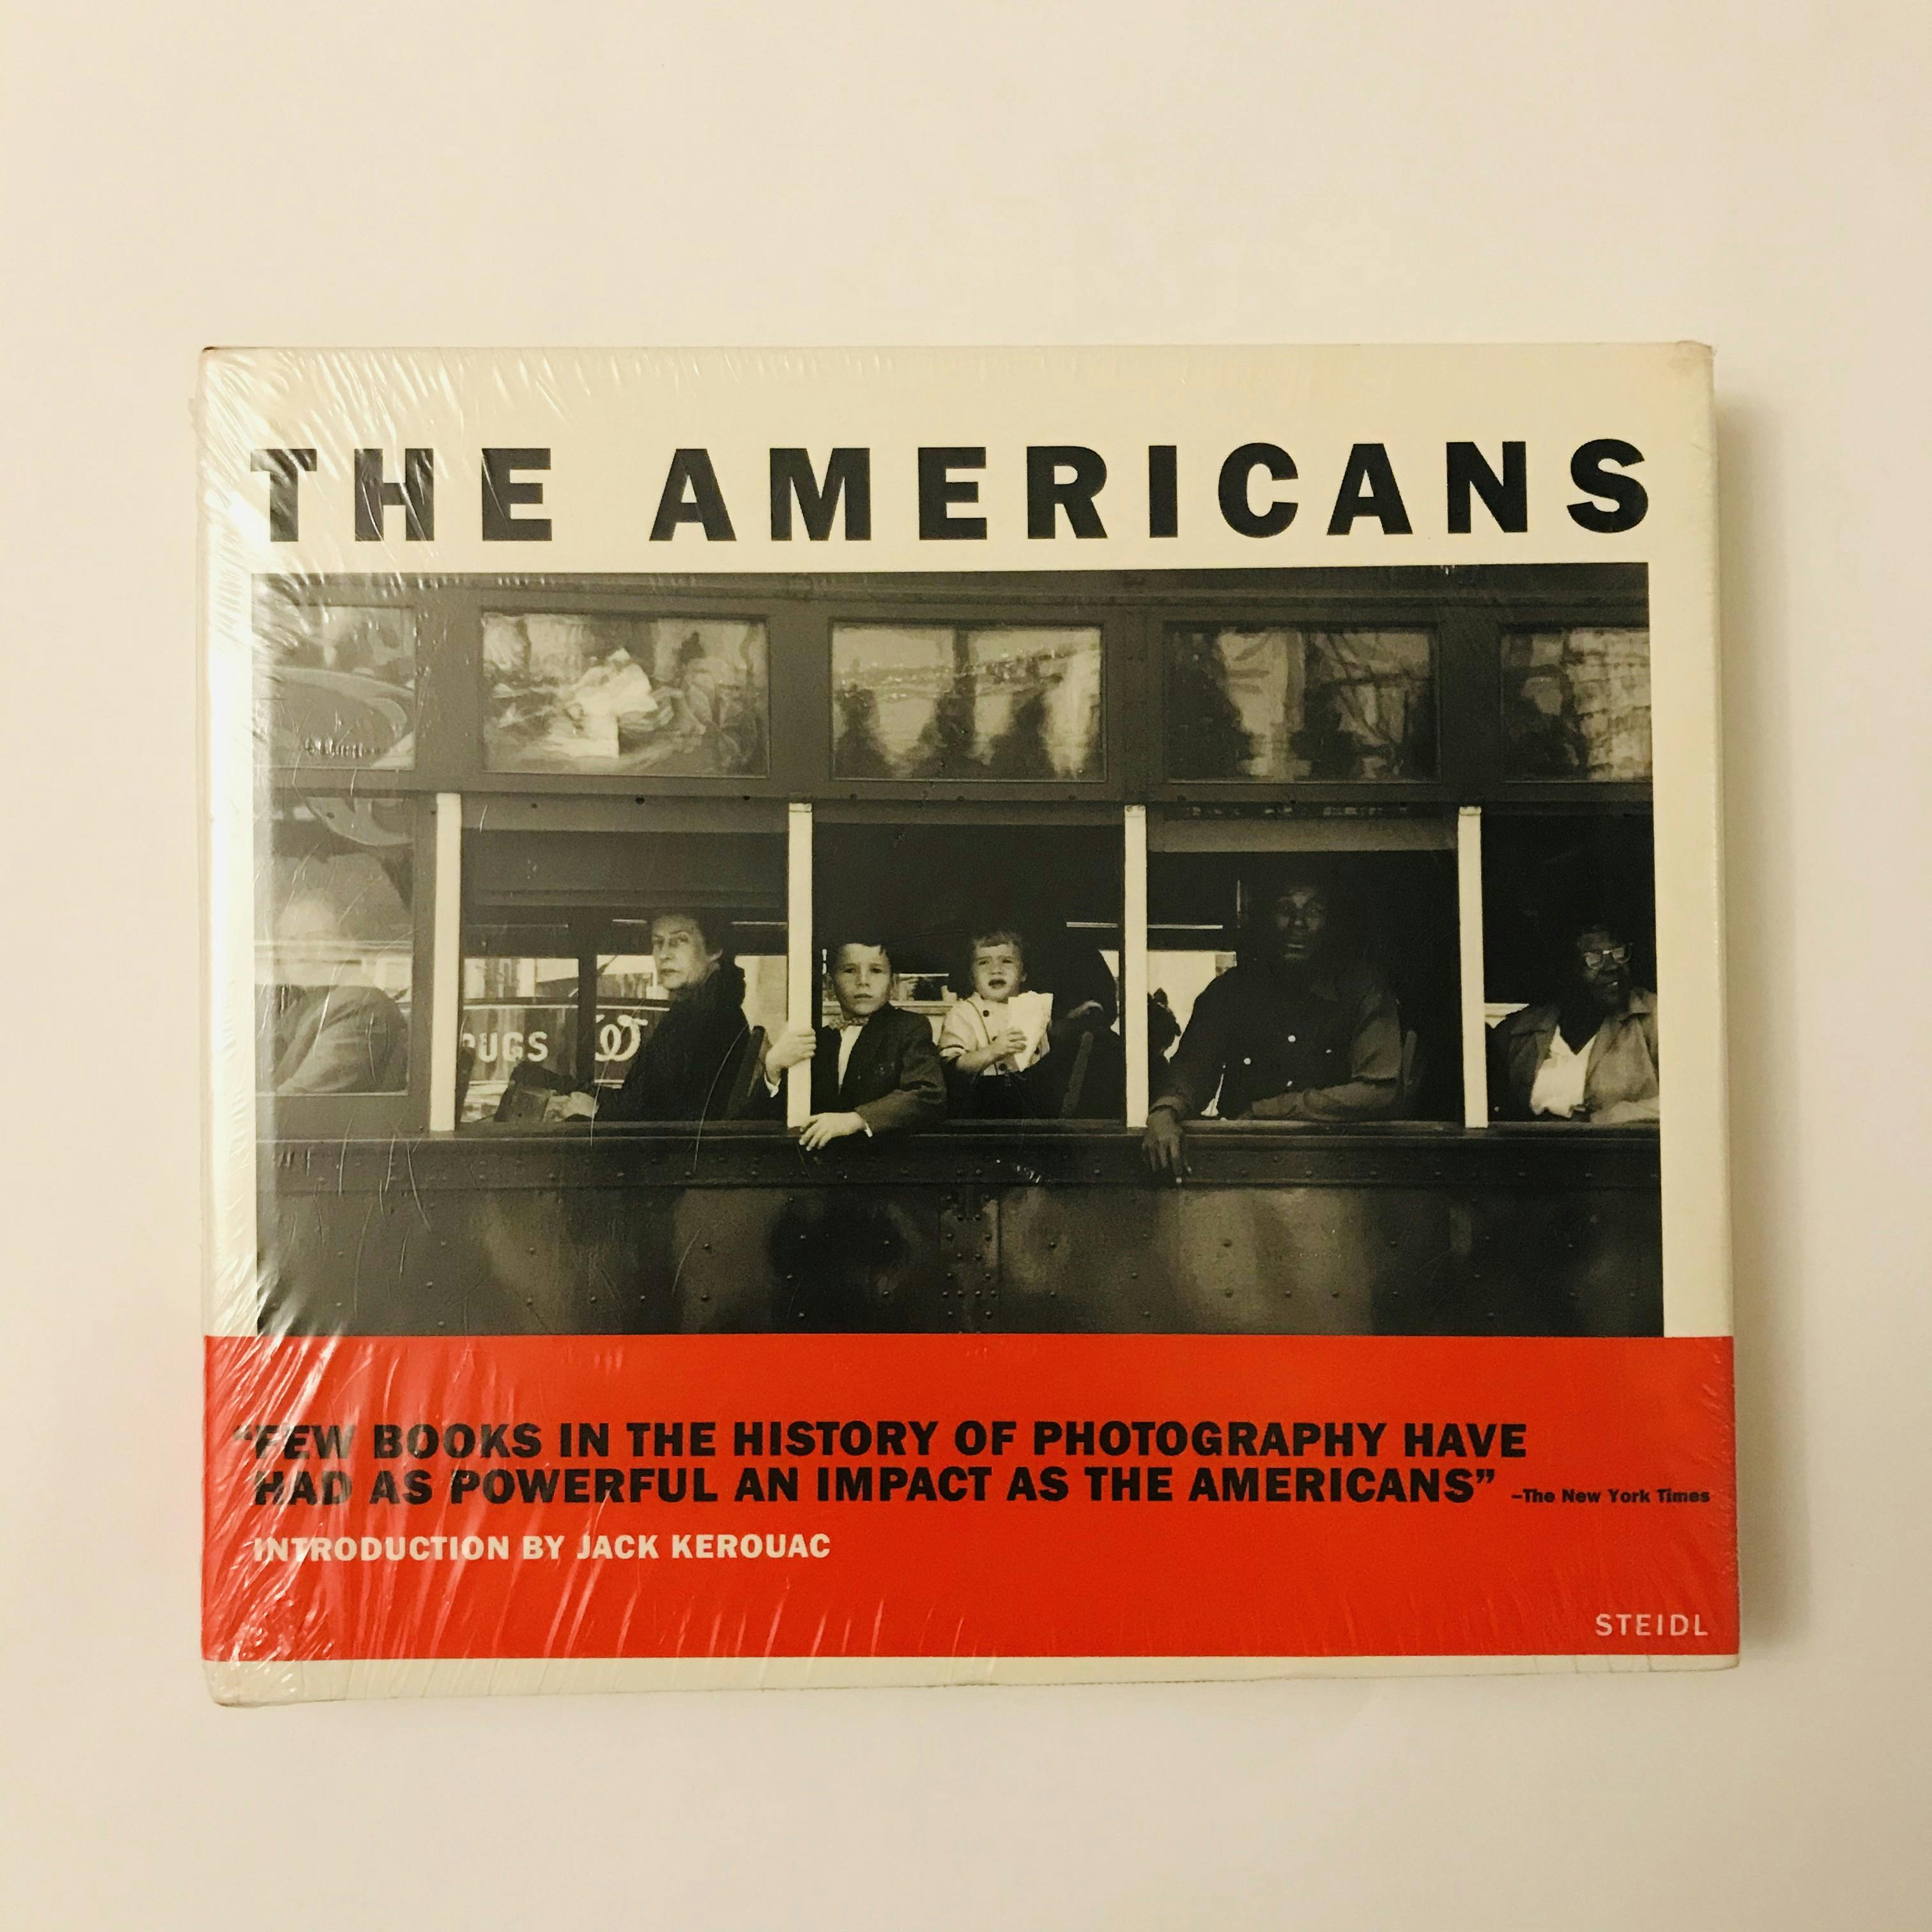 "THE AMERICANS", de Robert Frank